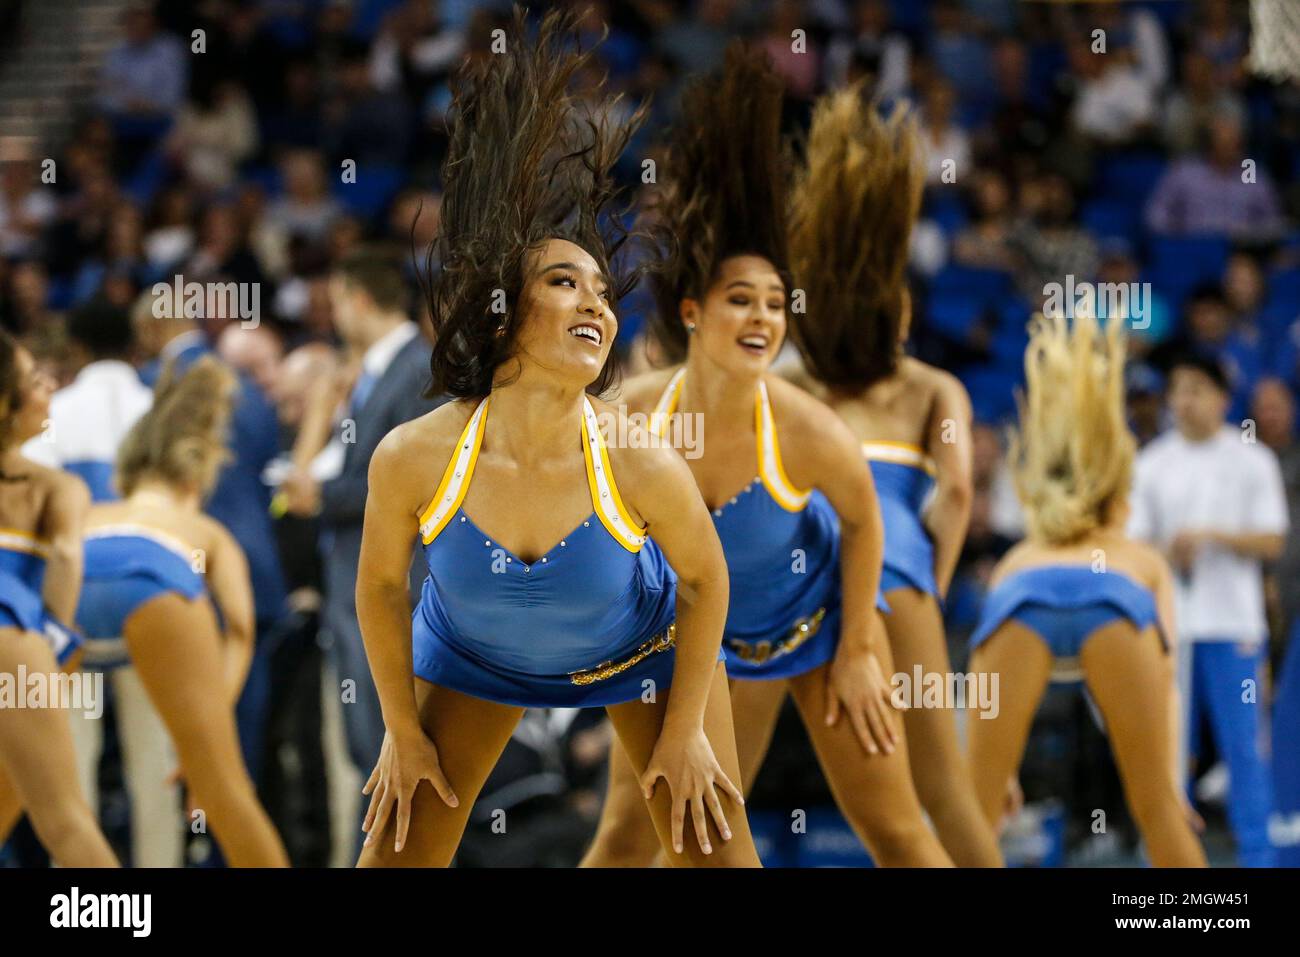 UCLA cheerleaders perform during an NCAA college basketball game